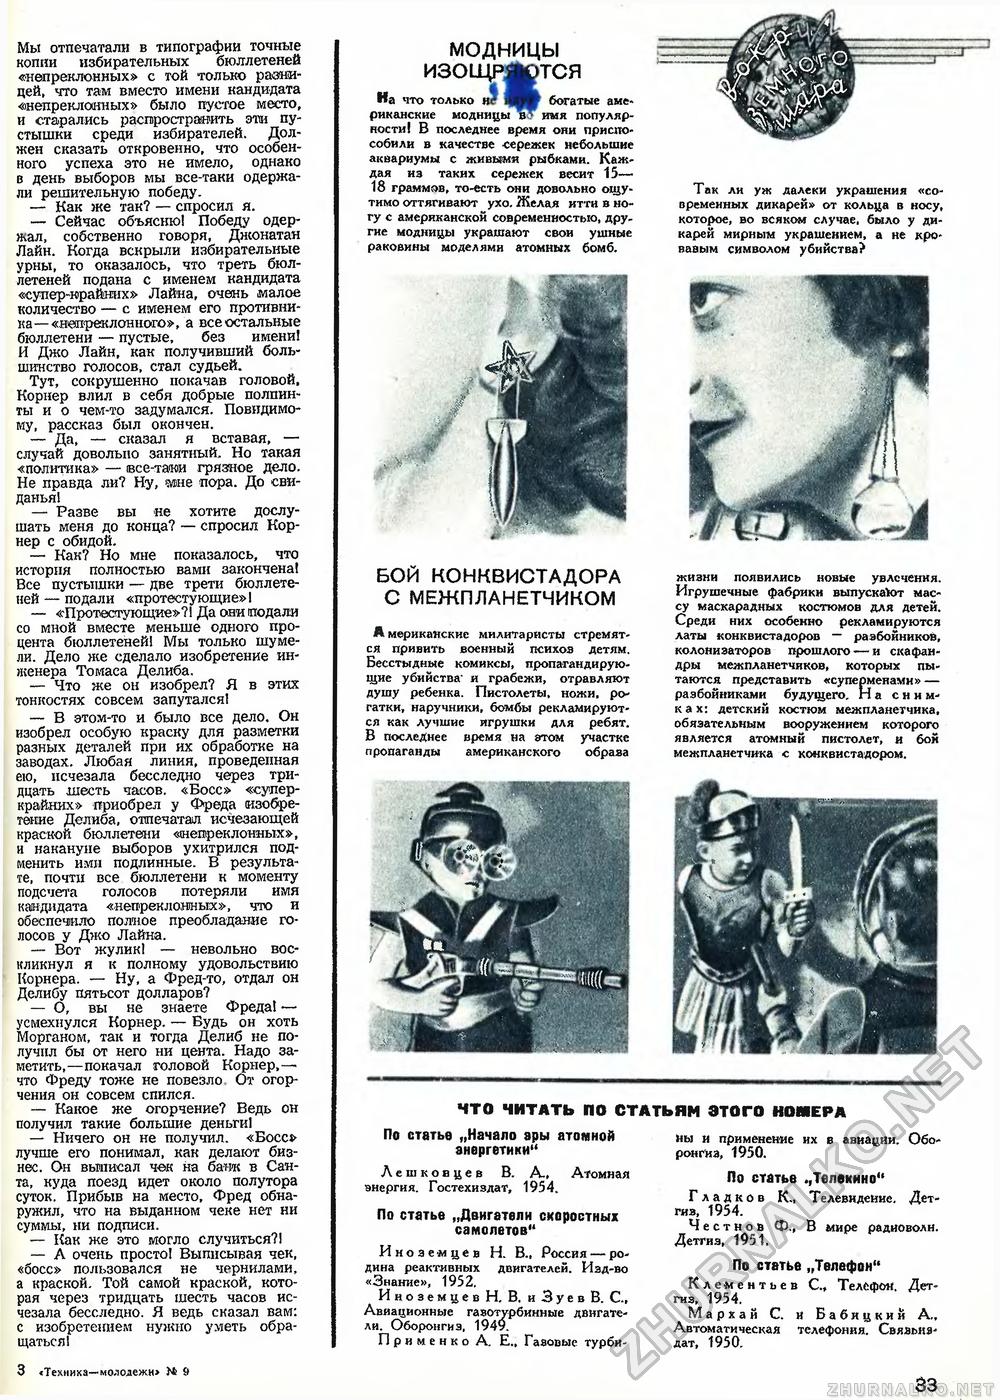 «Бой конквистадора с межпланетчиком». Техника - молодёжи 1954-09, стр. 33.jpg